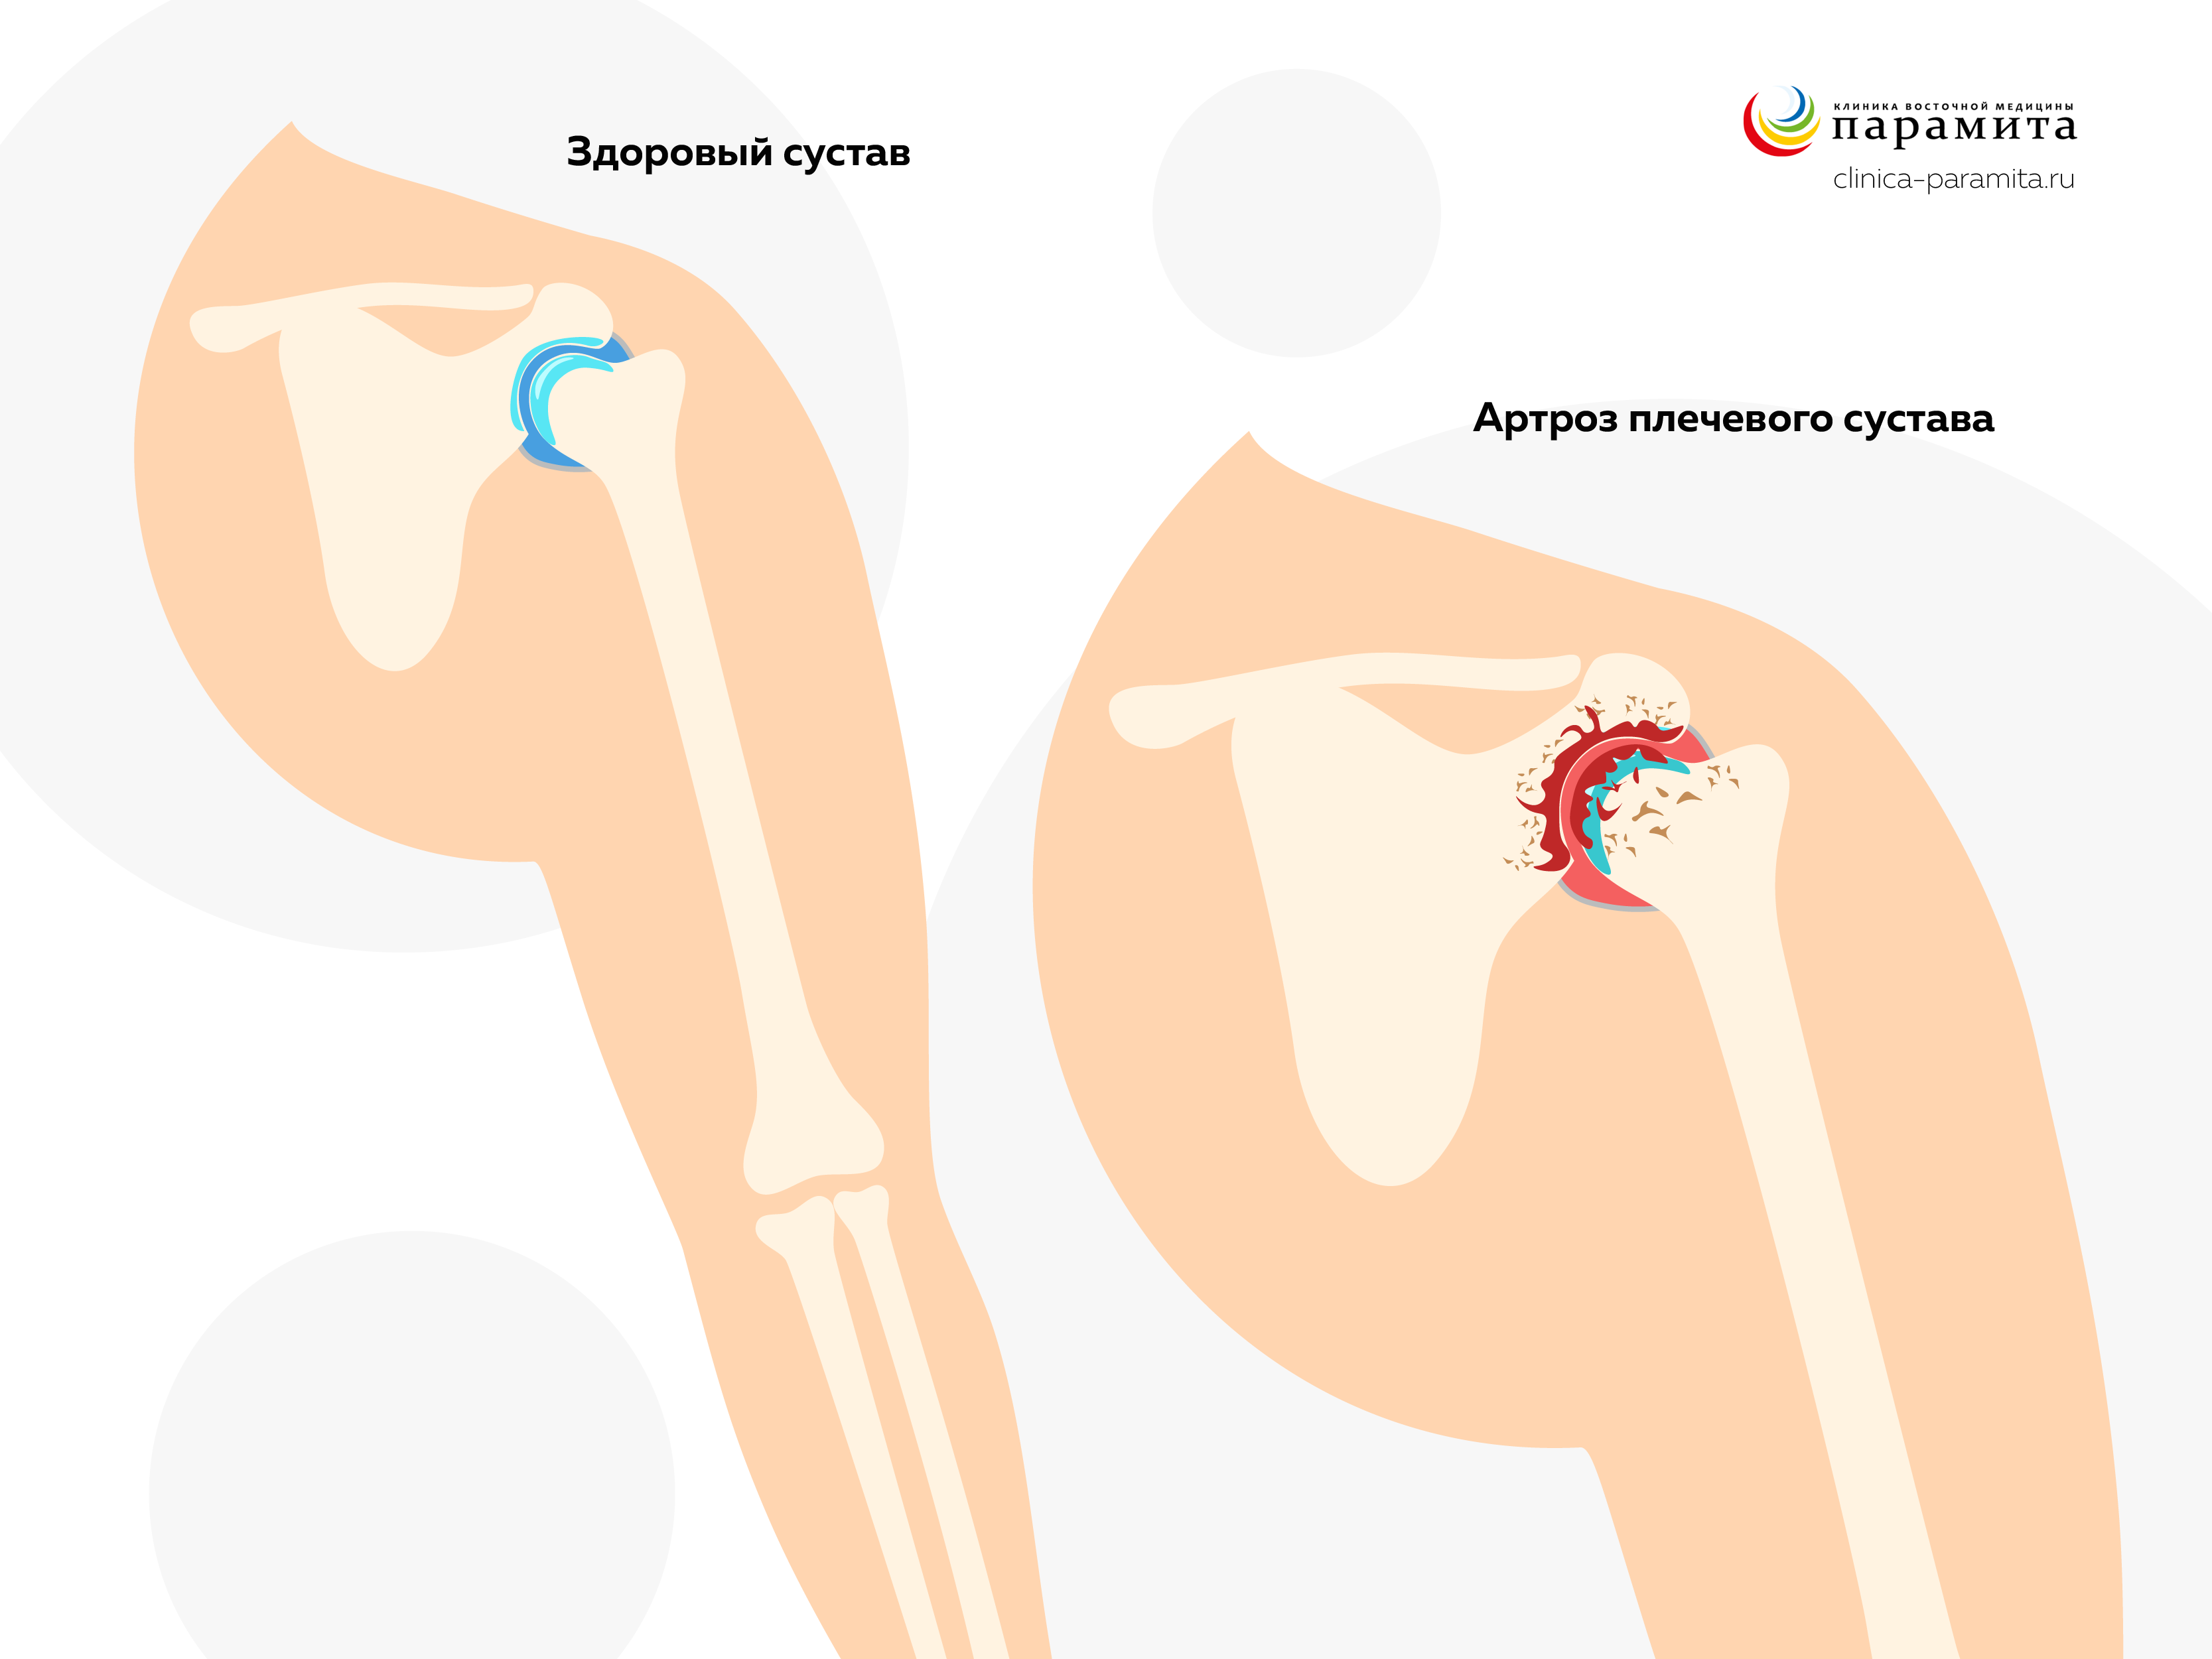 Артроз плечевого сустава - частая причина болей при поднятии руки